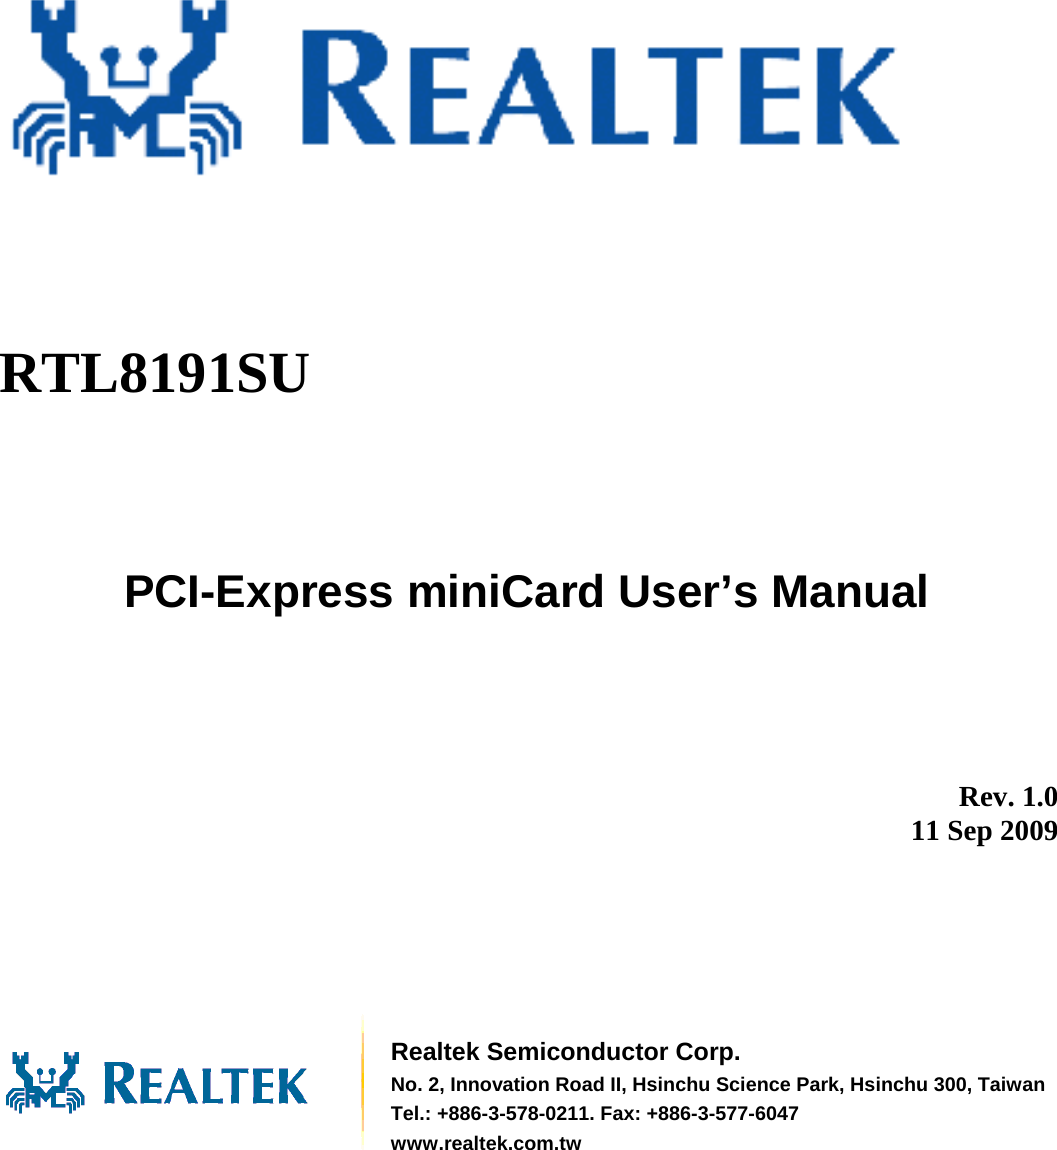                PCI-Express miniCard User’s Manual          Rev. 1.0 11 Sep 2009        Realtek Semiconductor Corp. No. 2, Innovation Road II, Hsinchu Science Park, Hsinchu 300, TaiwanTel.: +886-3-578-0211. Fax: +886-3-577-6047 www.realtek.com.tw RTL8191SU 